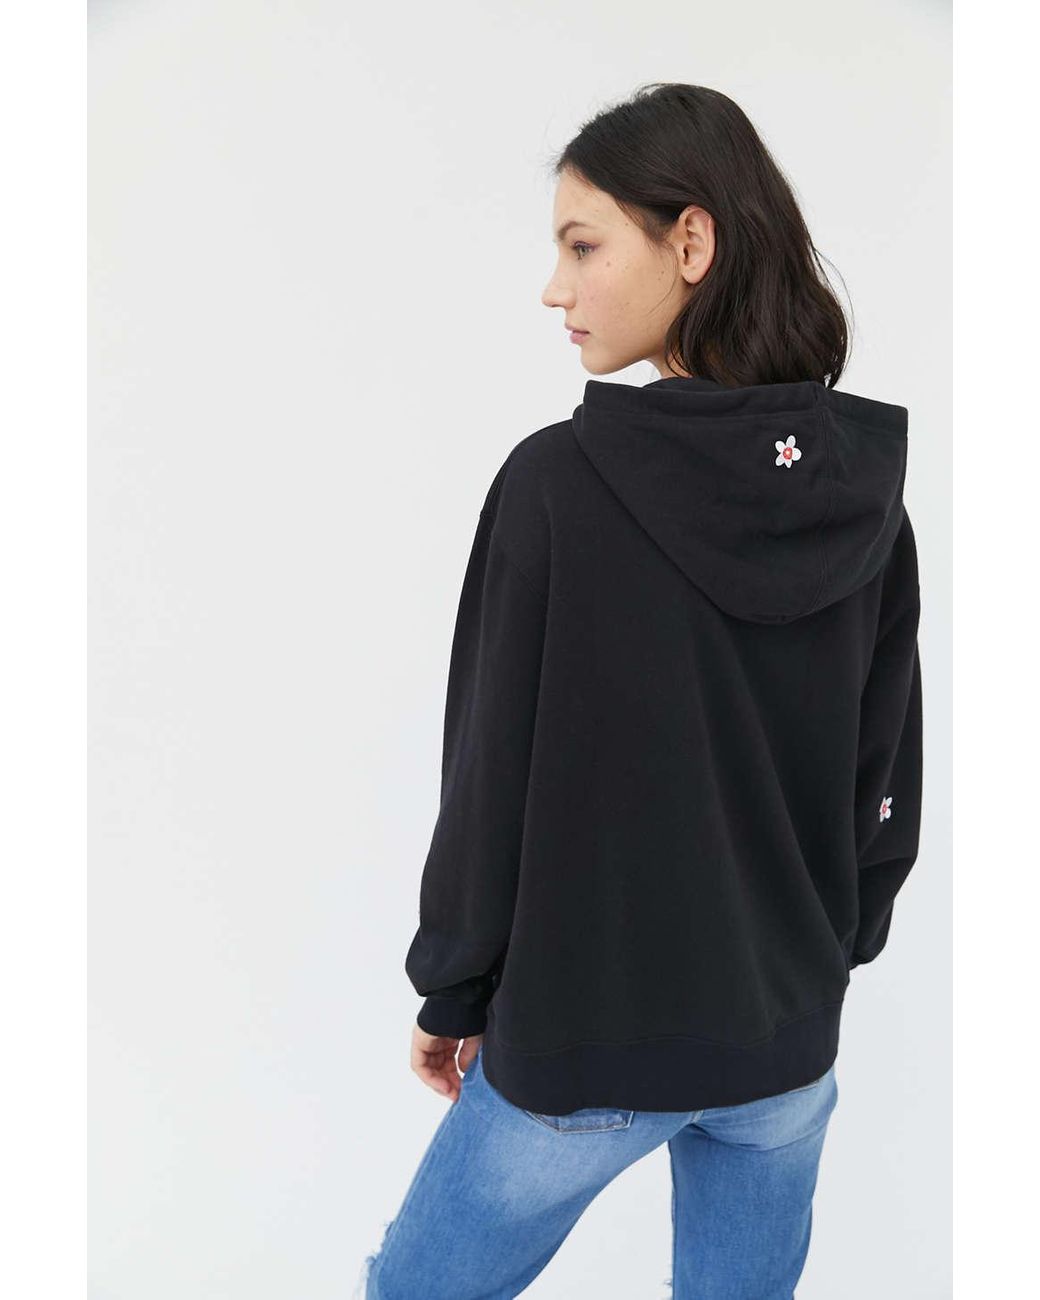 Nike Cotton Embroidered Flower Hoodie Sweatshirt in Black | Lyst